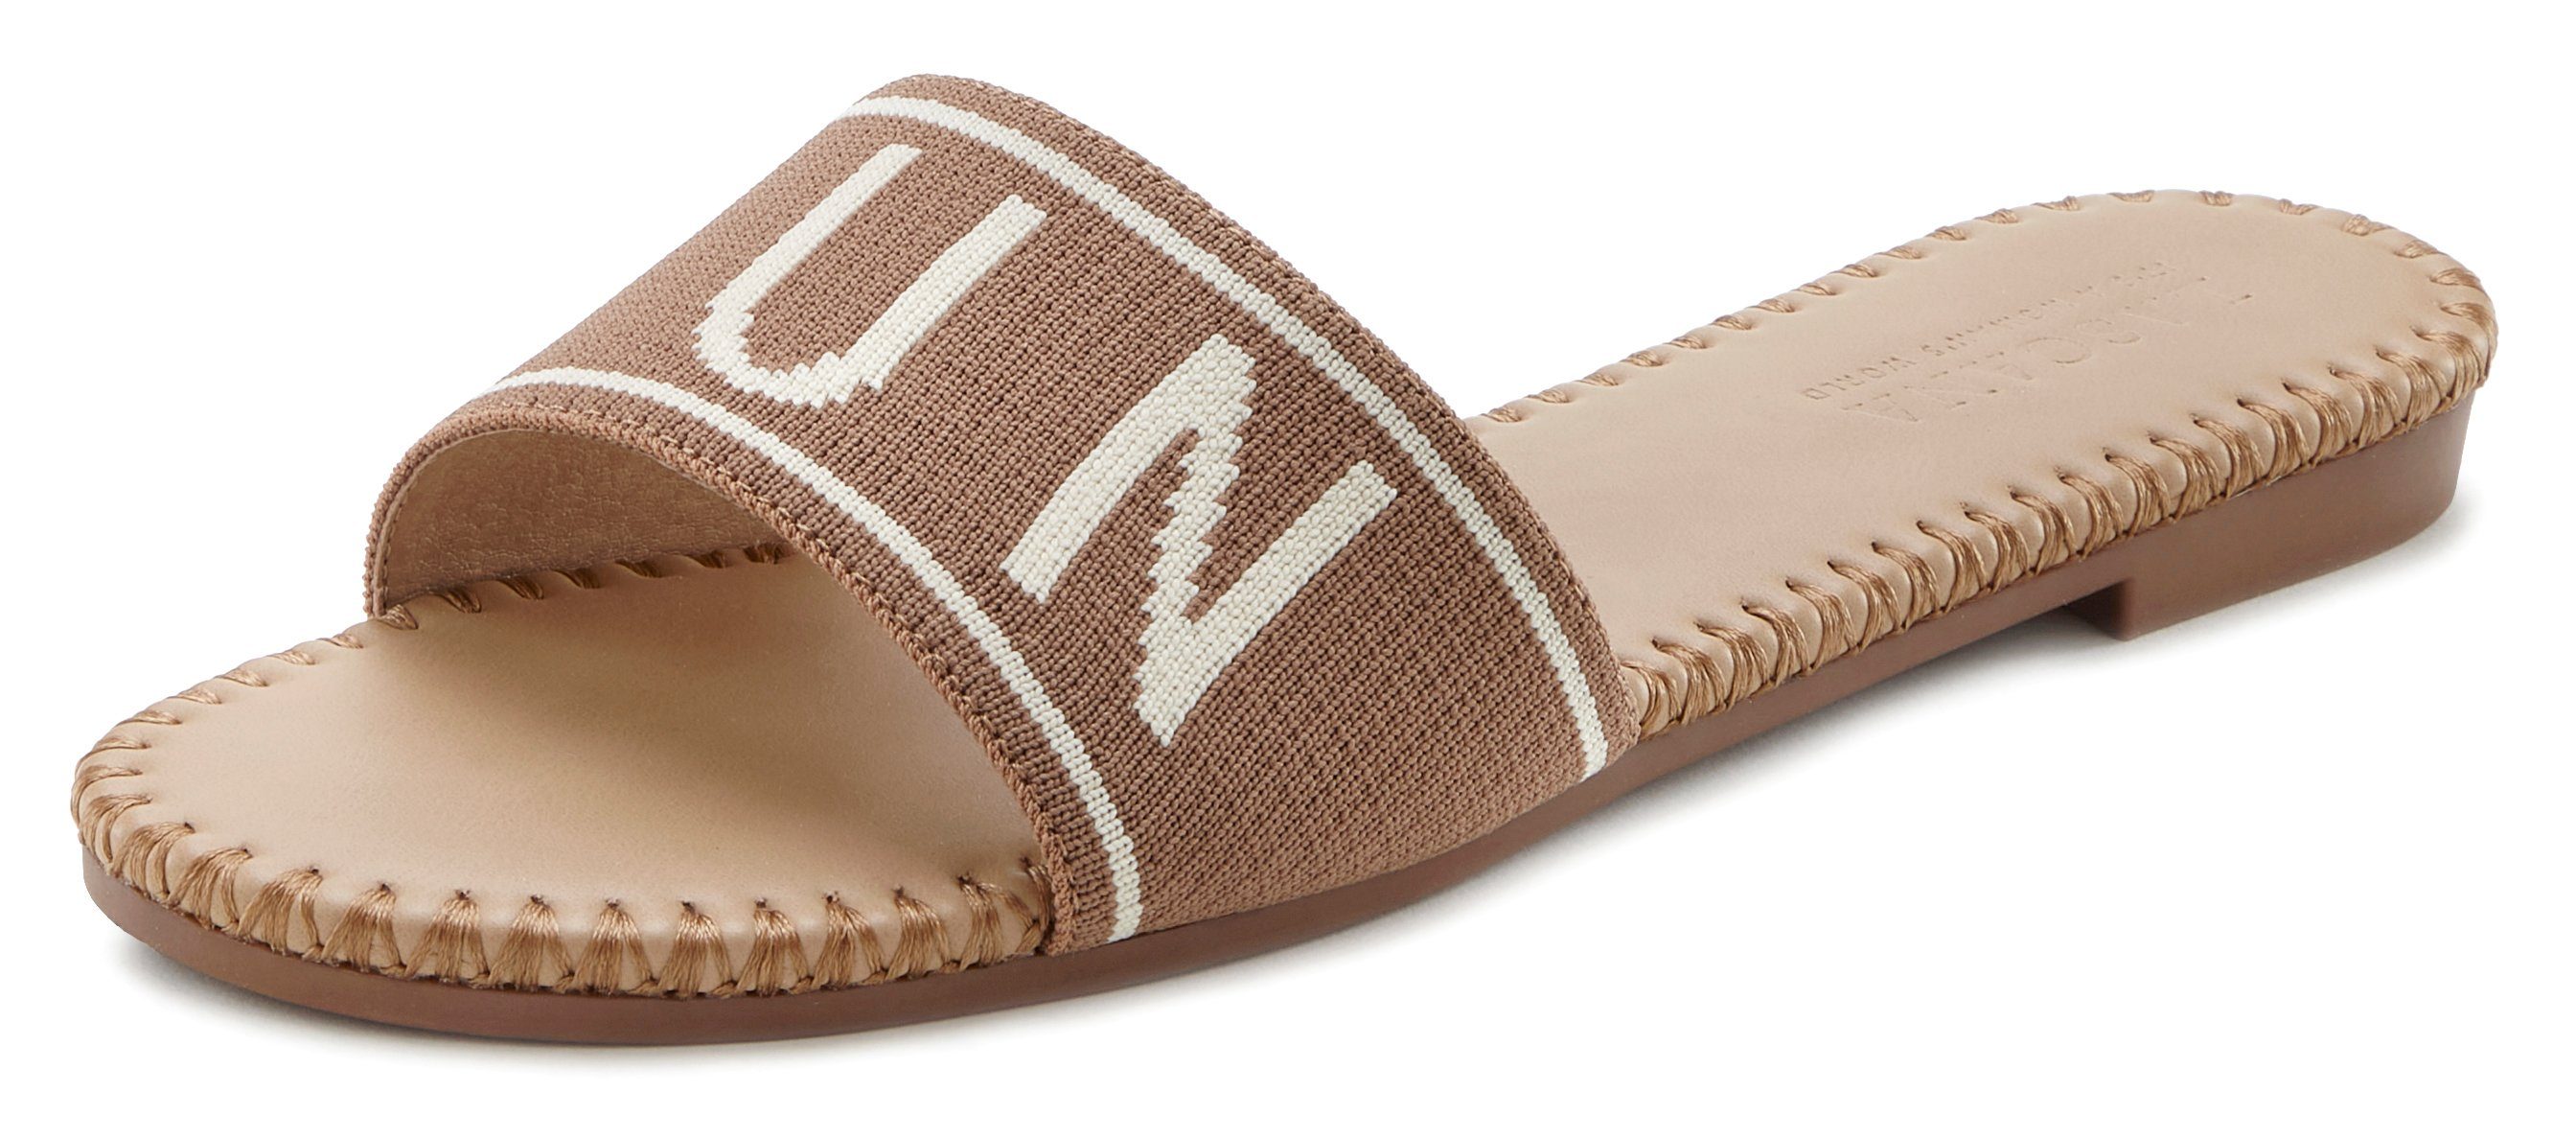 Textil Schriftzug VEGAN mit Pantolette offener modischem taupe LASCANA Schuh Sandale, Mule, aus